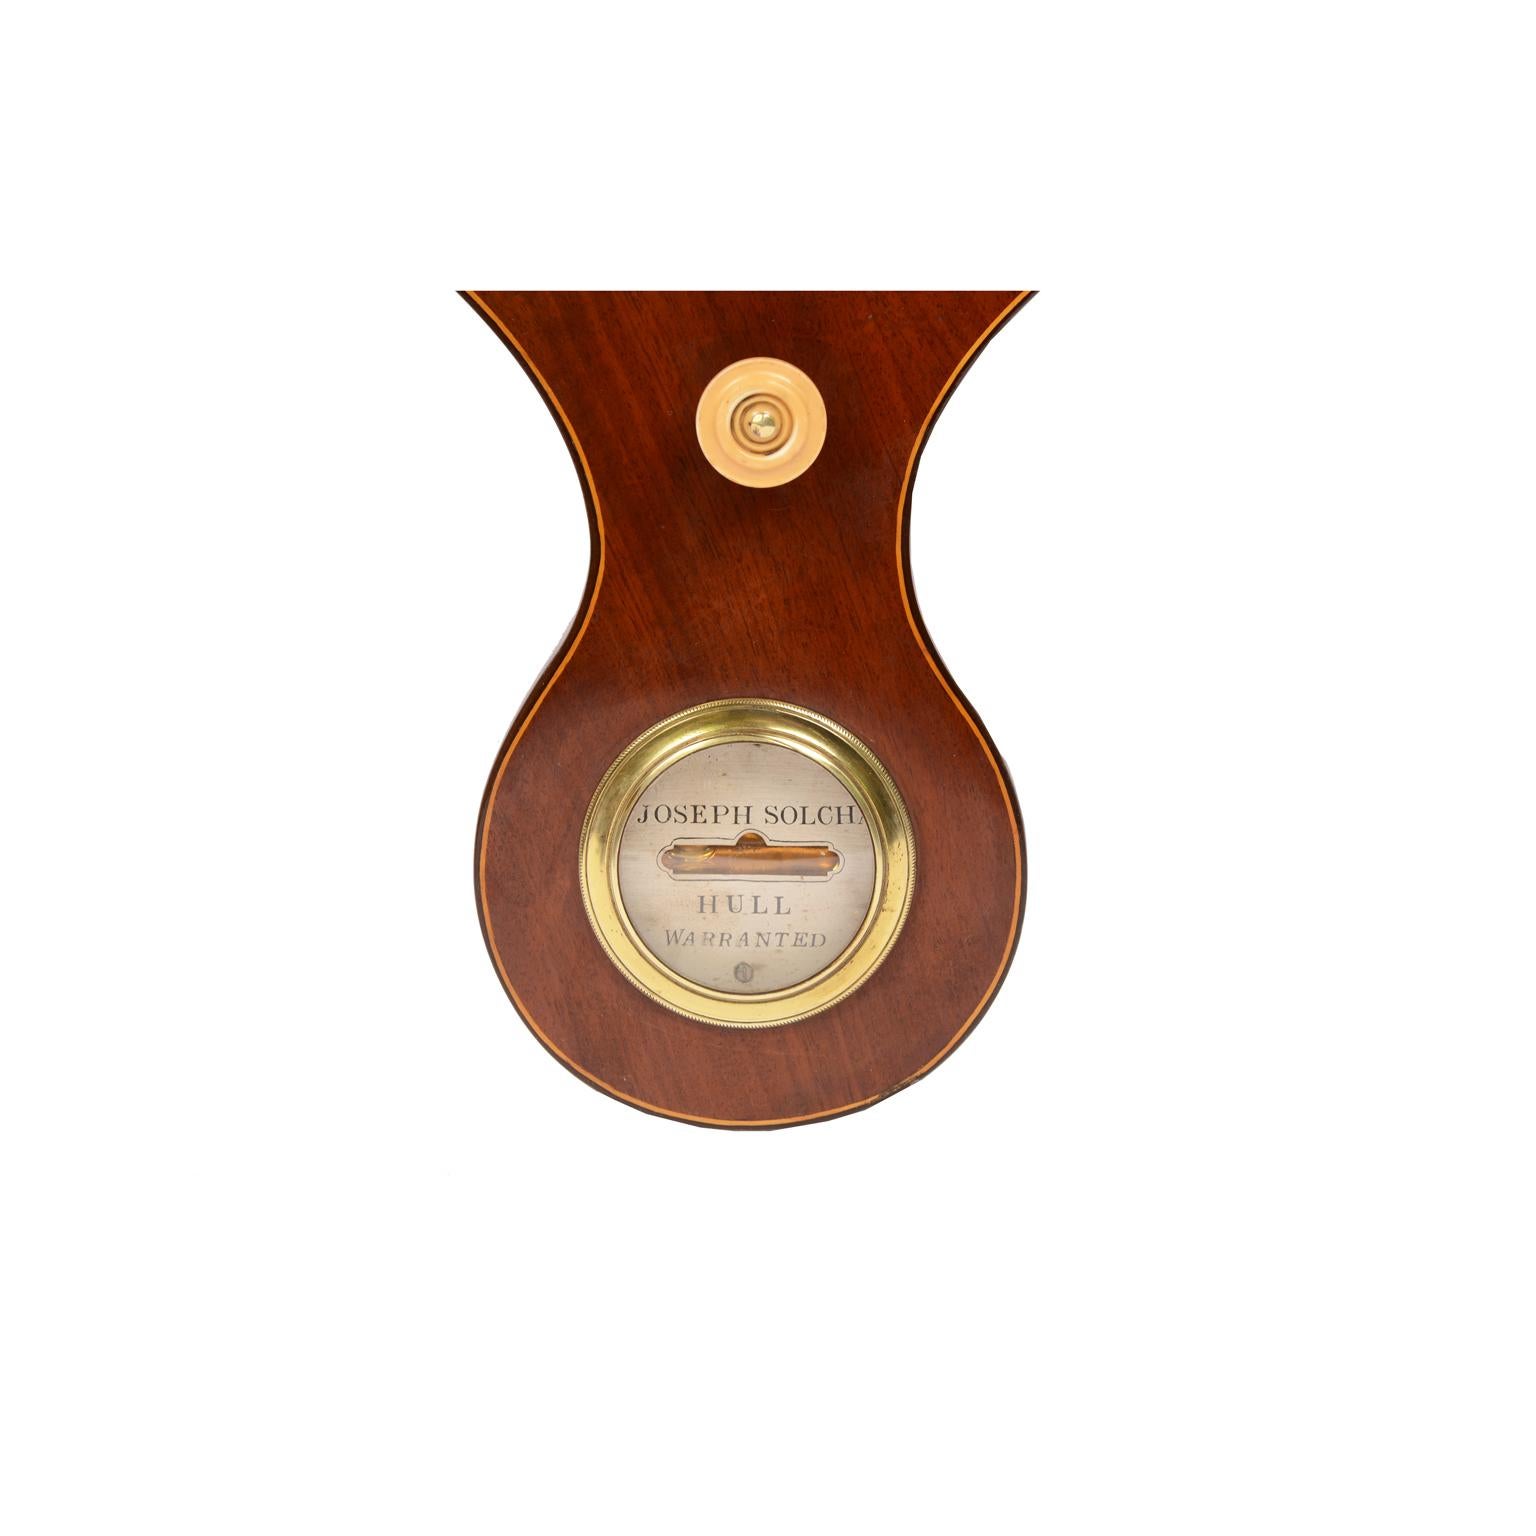 19th Century Antique Barometer Joseph Solcha Hull Antique Forecast Instrument 2